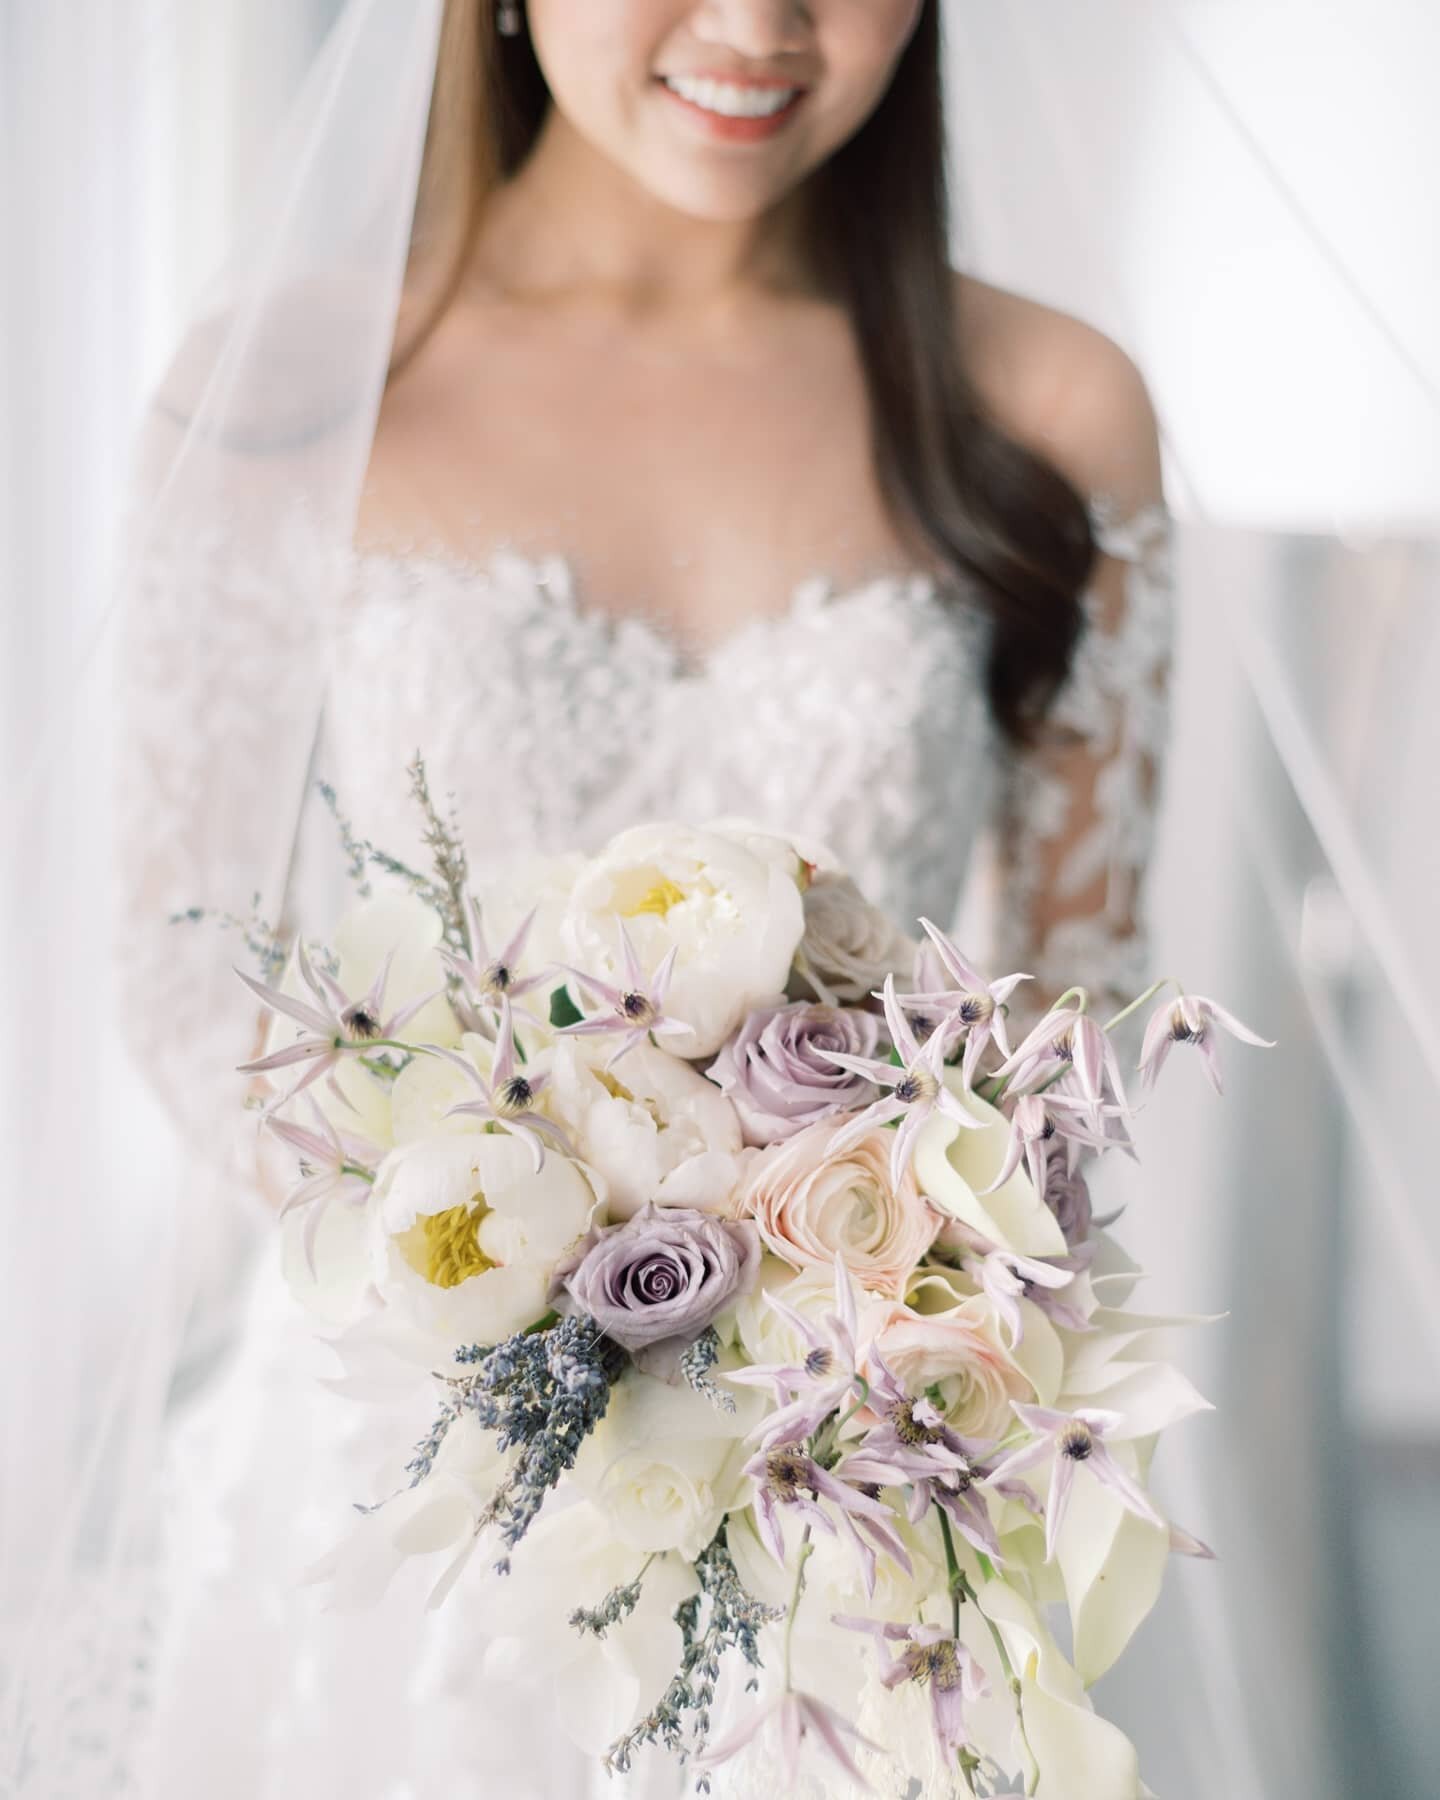 Elegant wedding bouquet by @bloomseventstyling

#JayMayugaPhotography #JayMayugaPhoto #SonyA7 #Mark1 #zeissPlanar